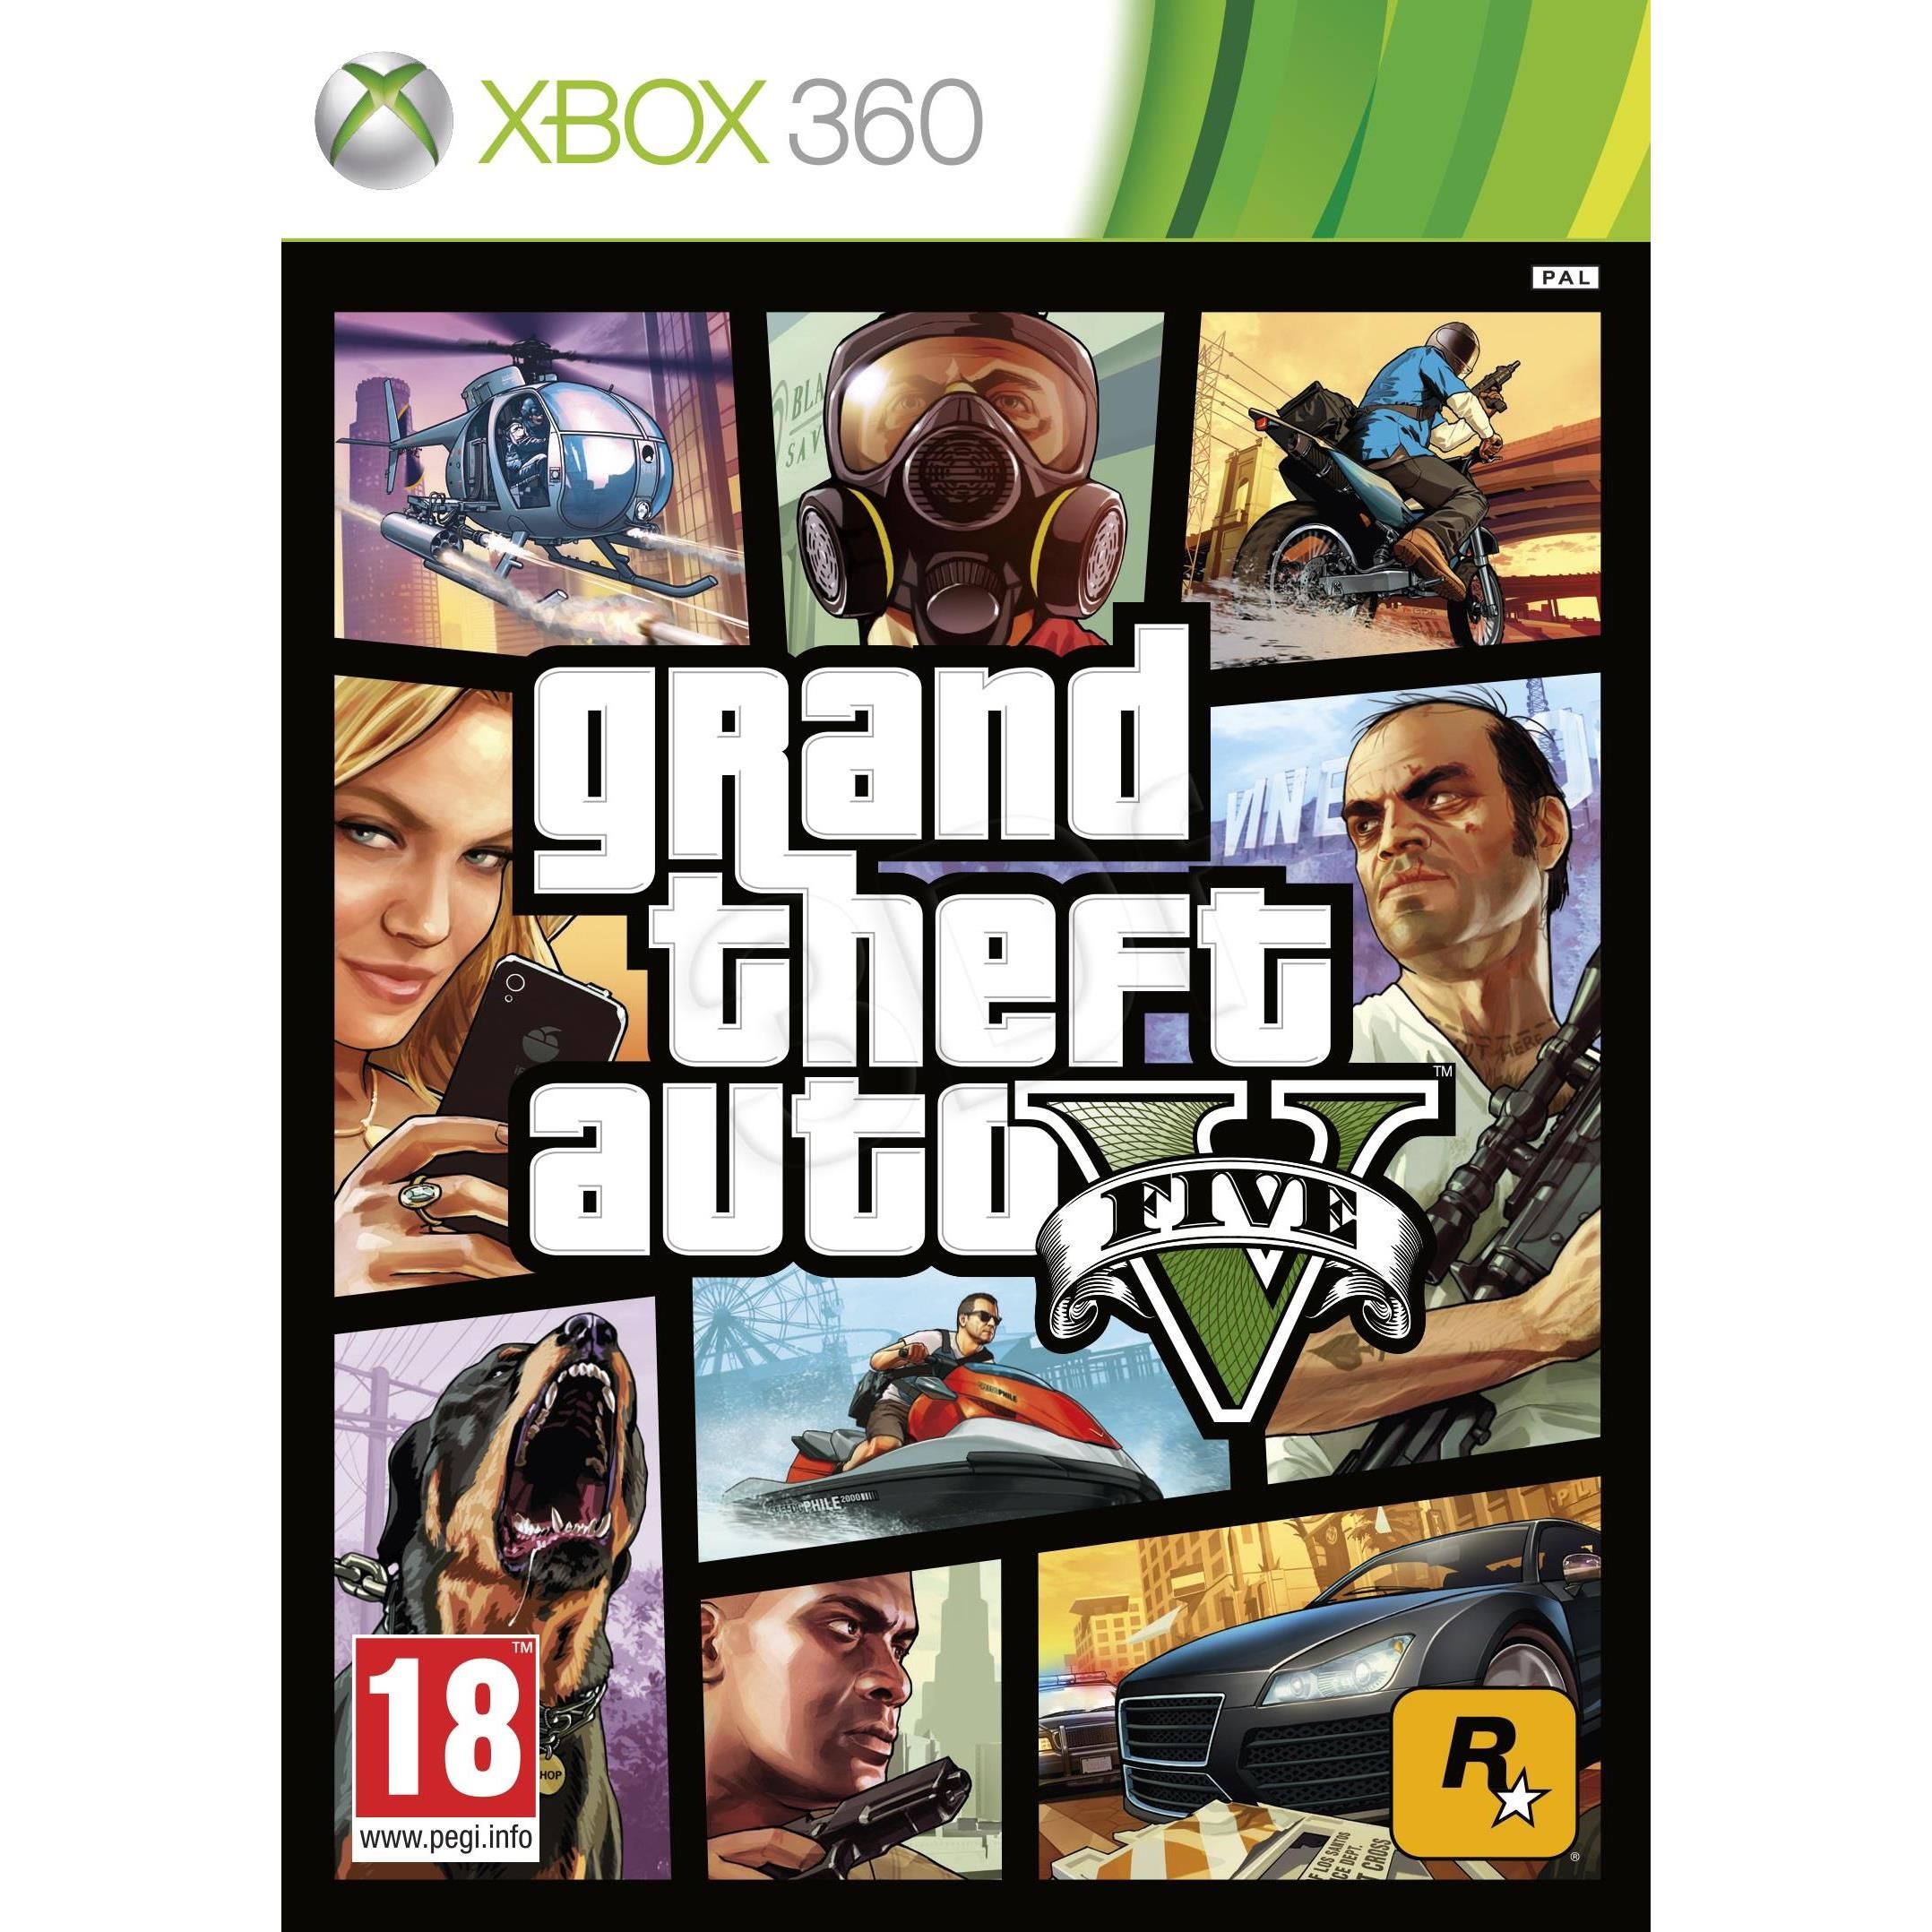 Gra Xbox 360 Grand Theft Auto V 6997665635 Oficjalne Archiwum Allegro